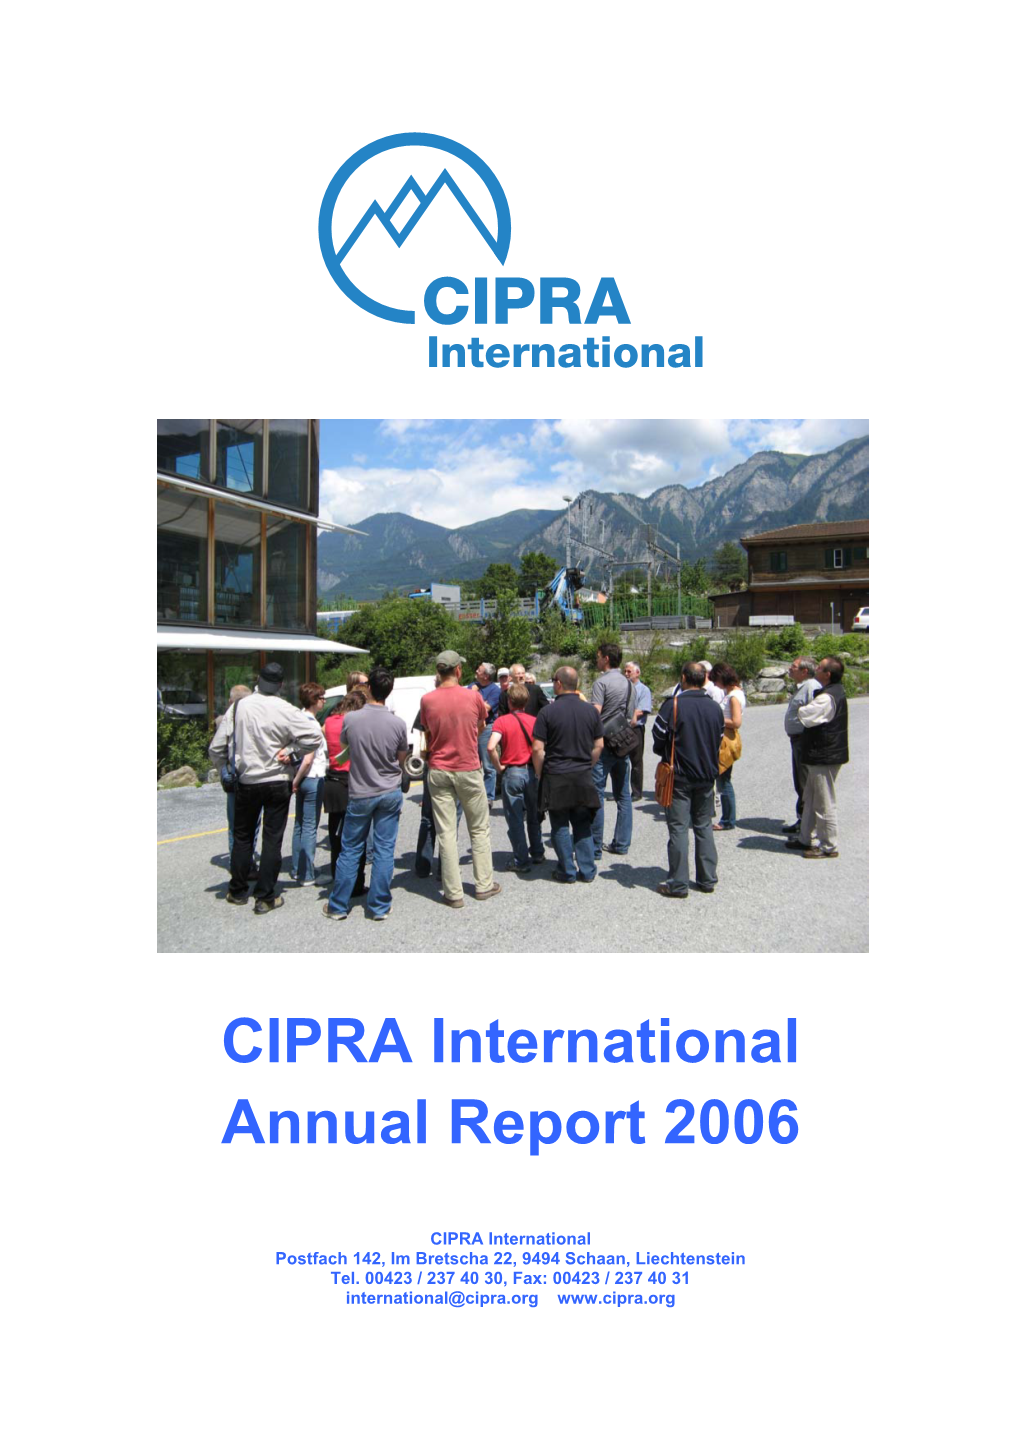 CIPRA International Annual Report 2006